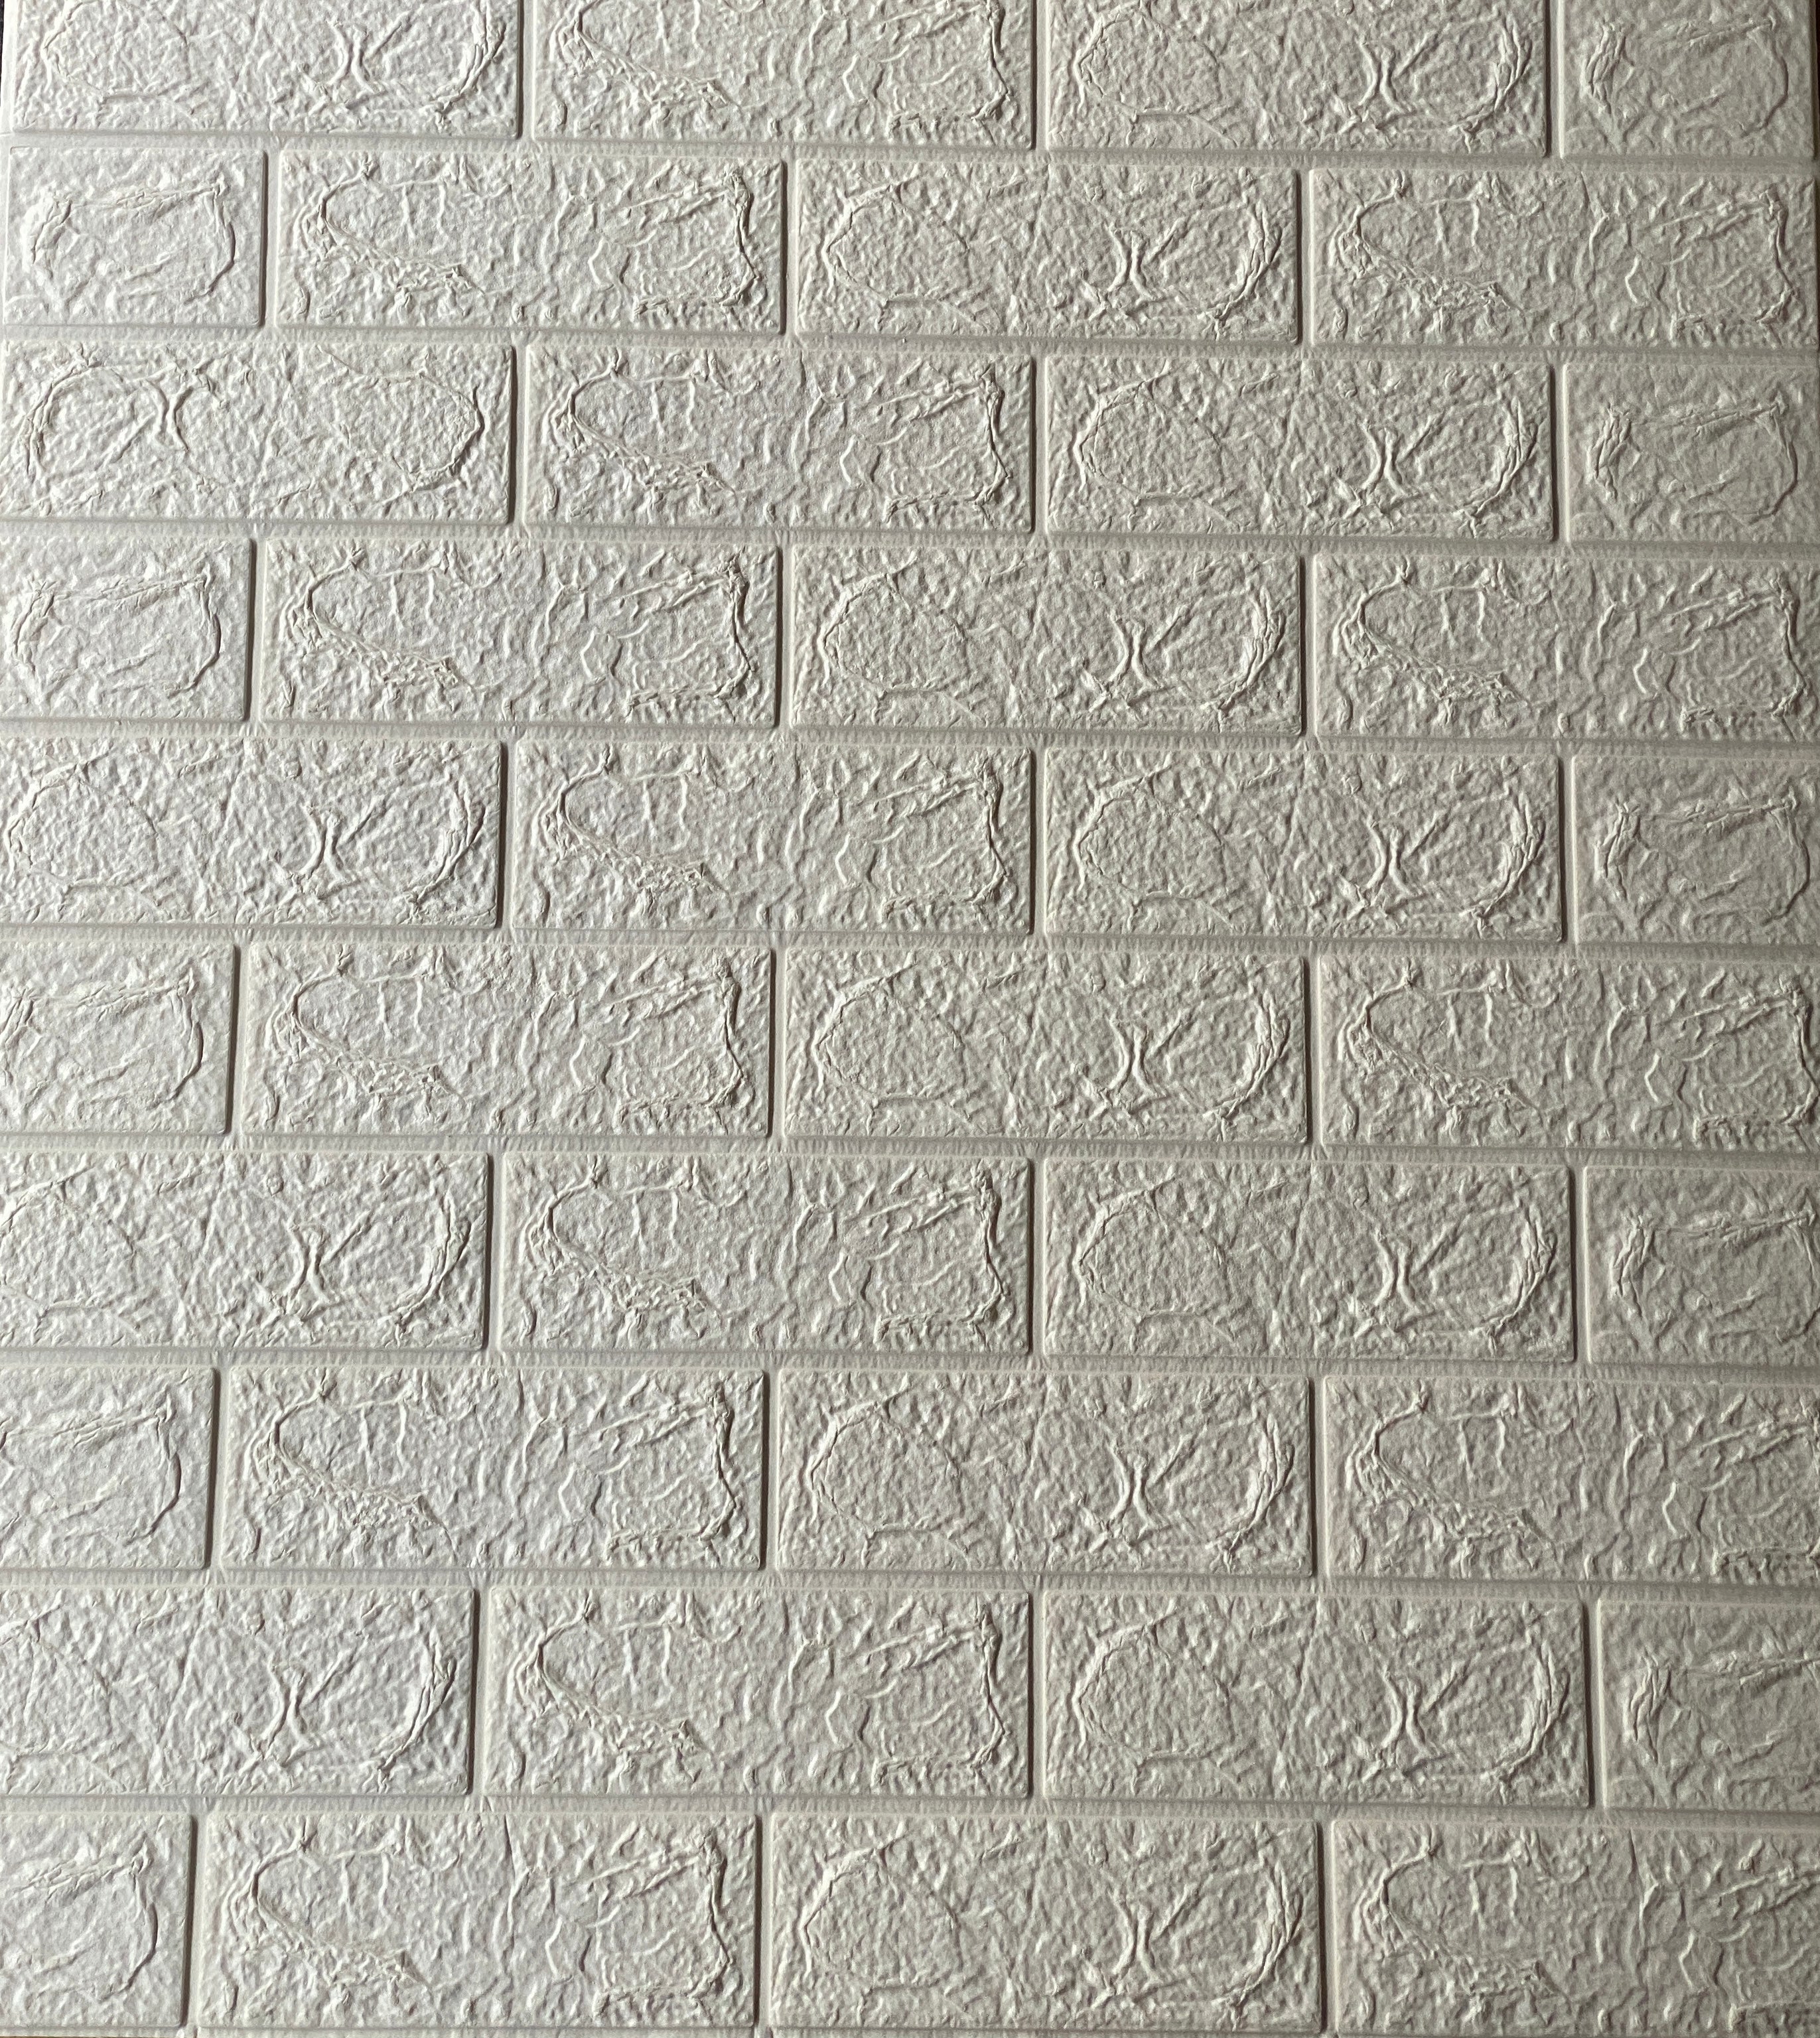 3D Brick Wallpaper PE Foam Self Adhesive Brick Design Wall Stickers DIY Wallpaper for Home Hotel Living Room Bedroom Cafe Decor (70 CM x 77 CM) (White)(Set Of 5)(FS-01)